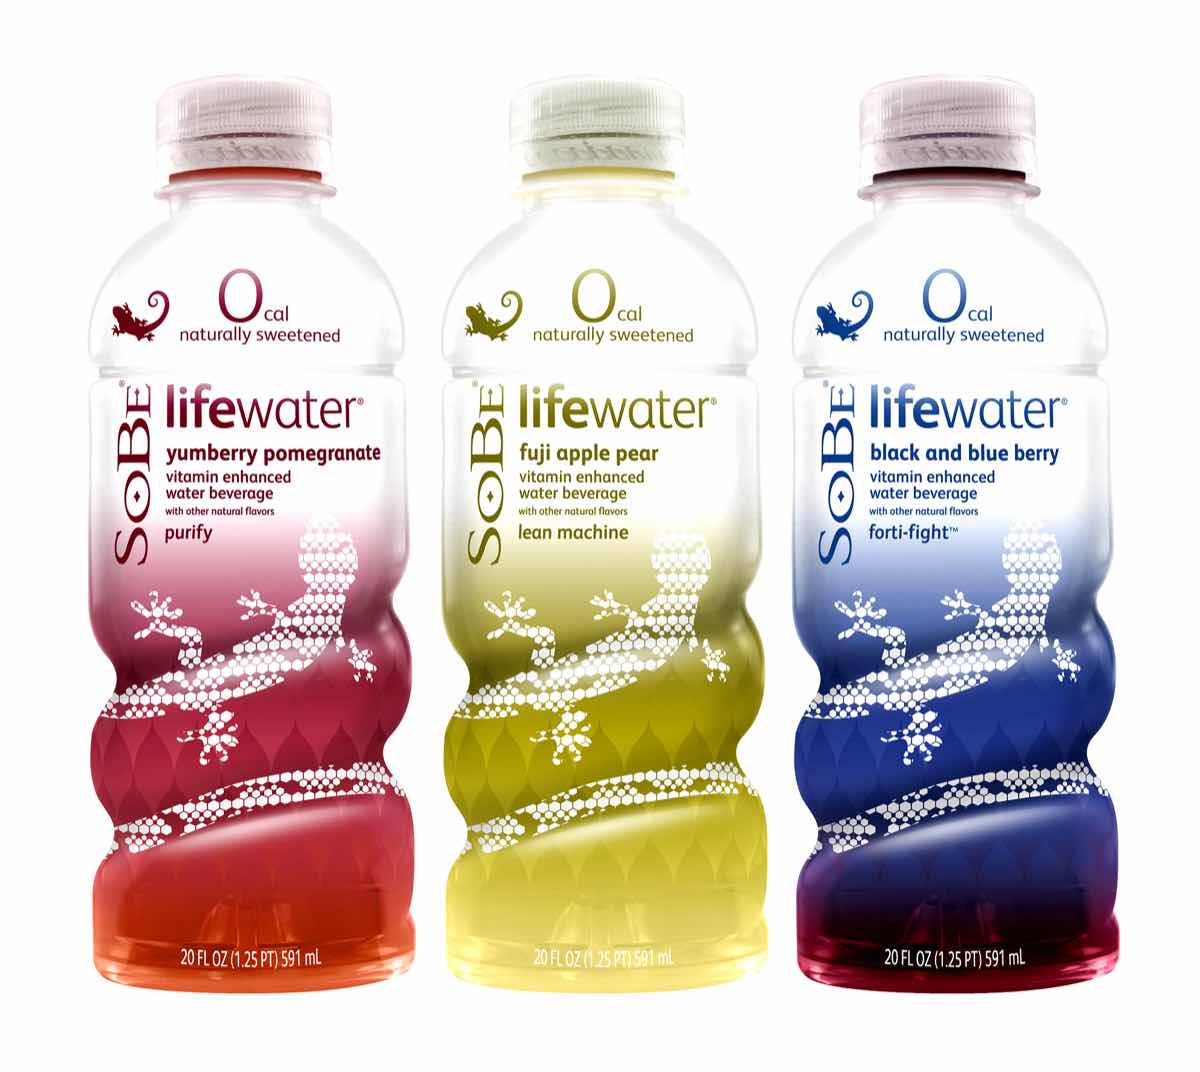 SoBe Lifewater zero-calorie range expands